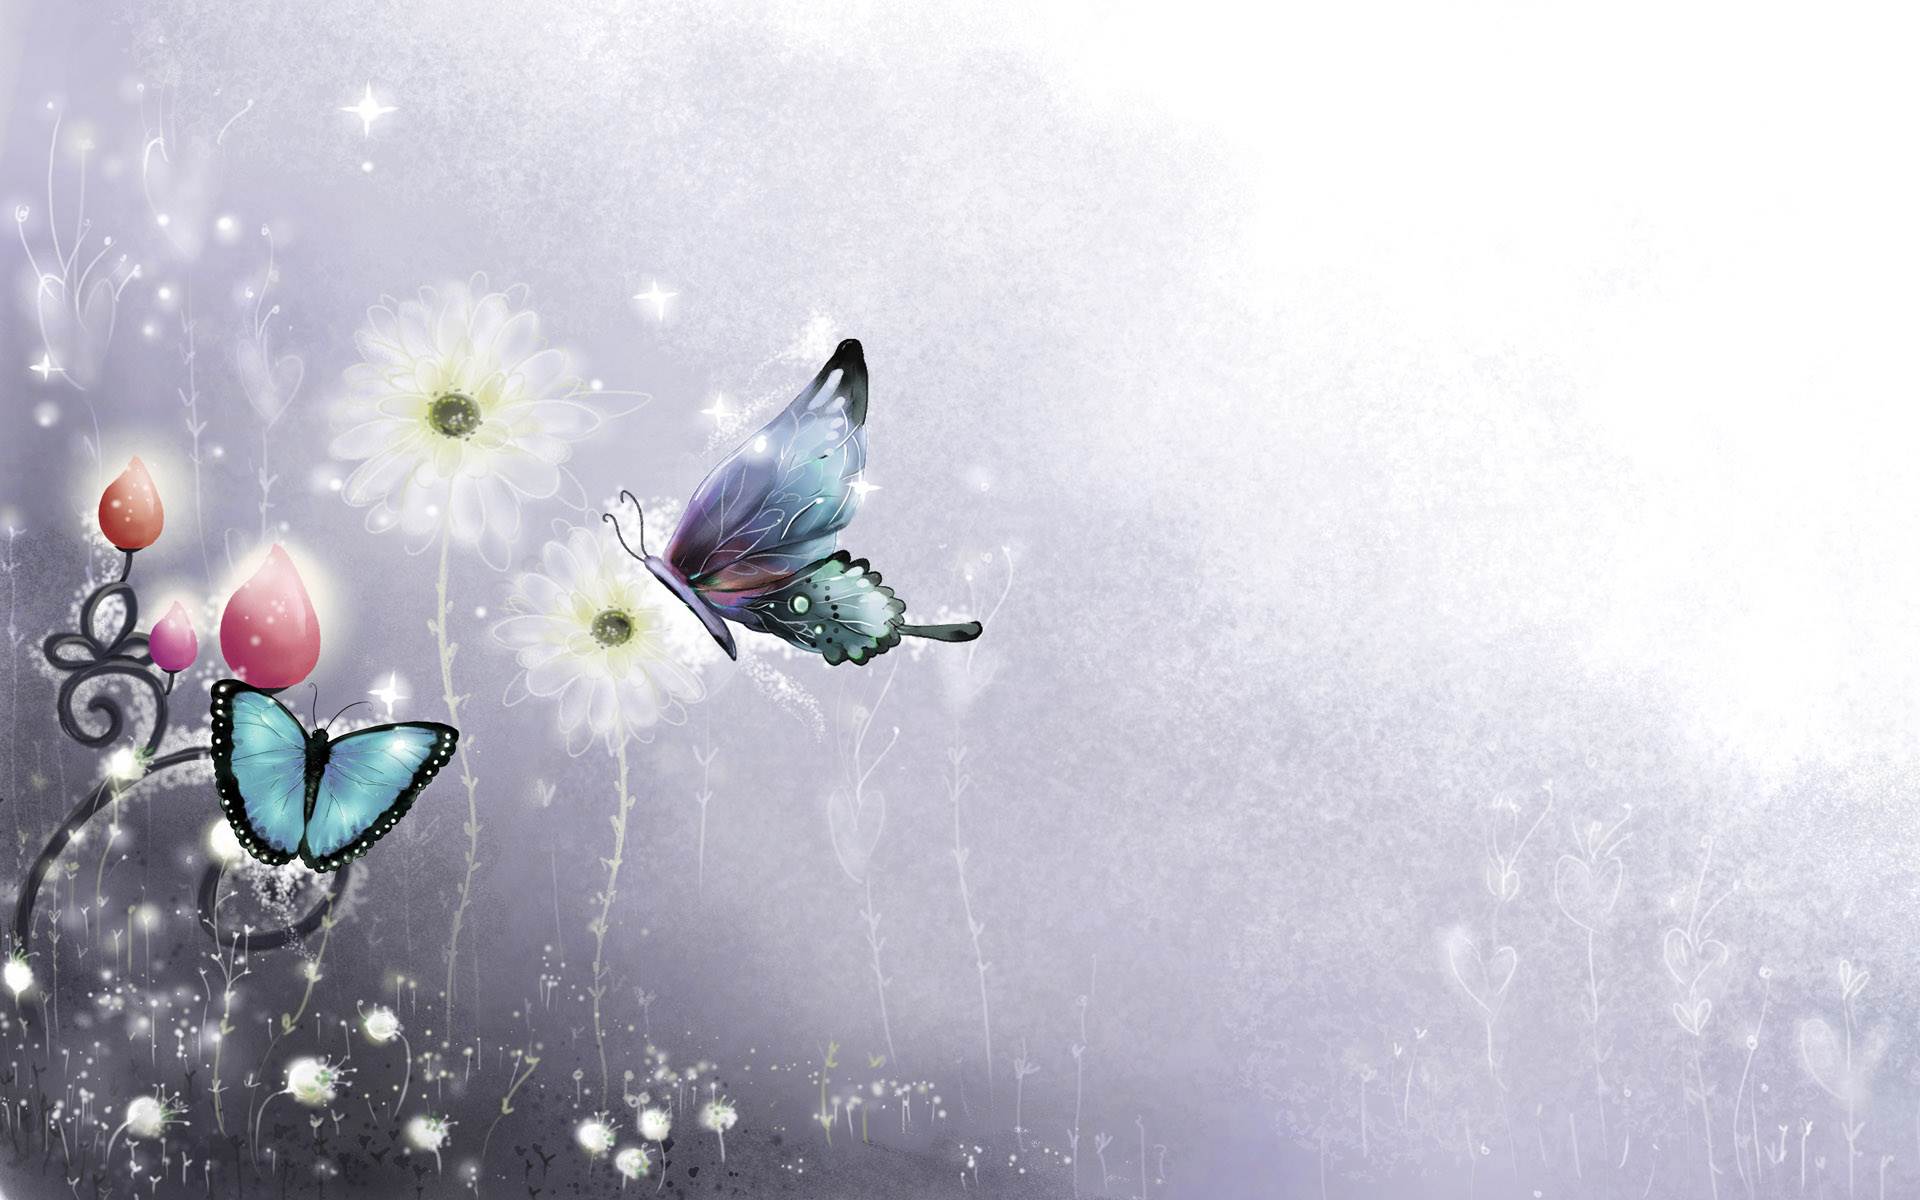 farfalla live wallpaper,la farfalla,cielo,falene e farfalle,pianta,sfondo